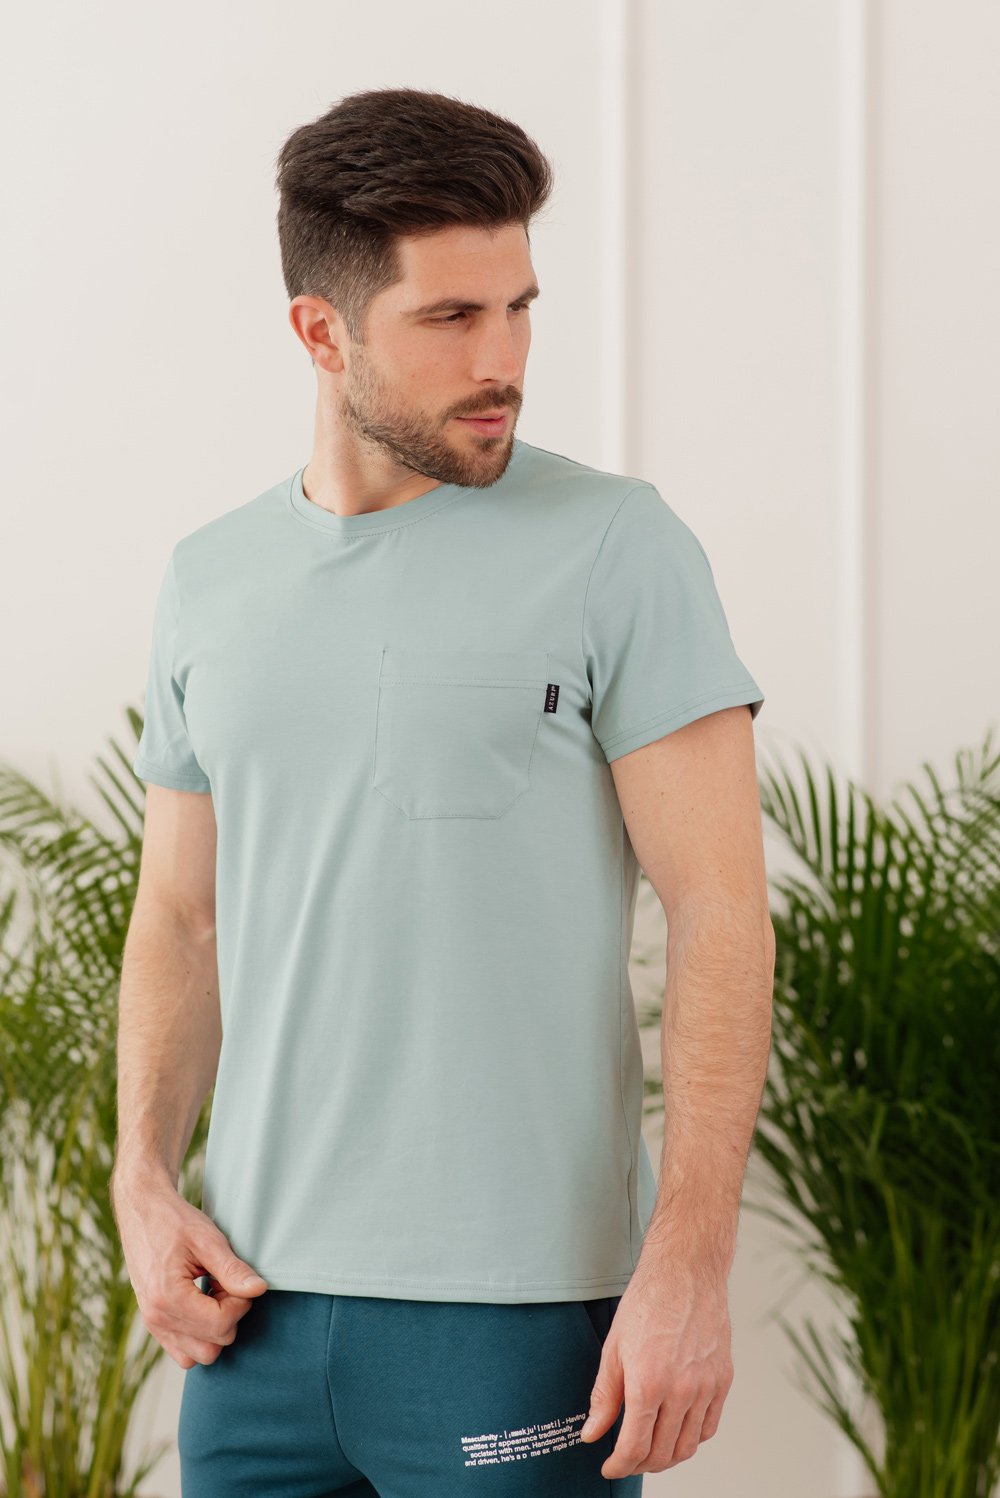 Turquoise cotton T-shirt